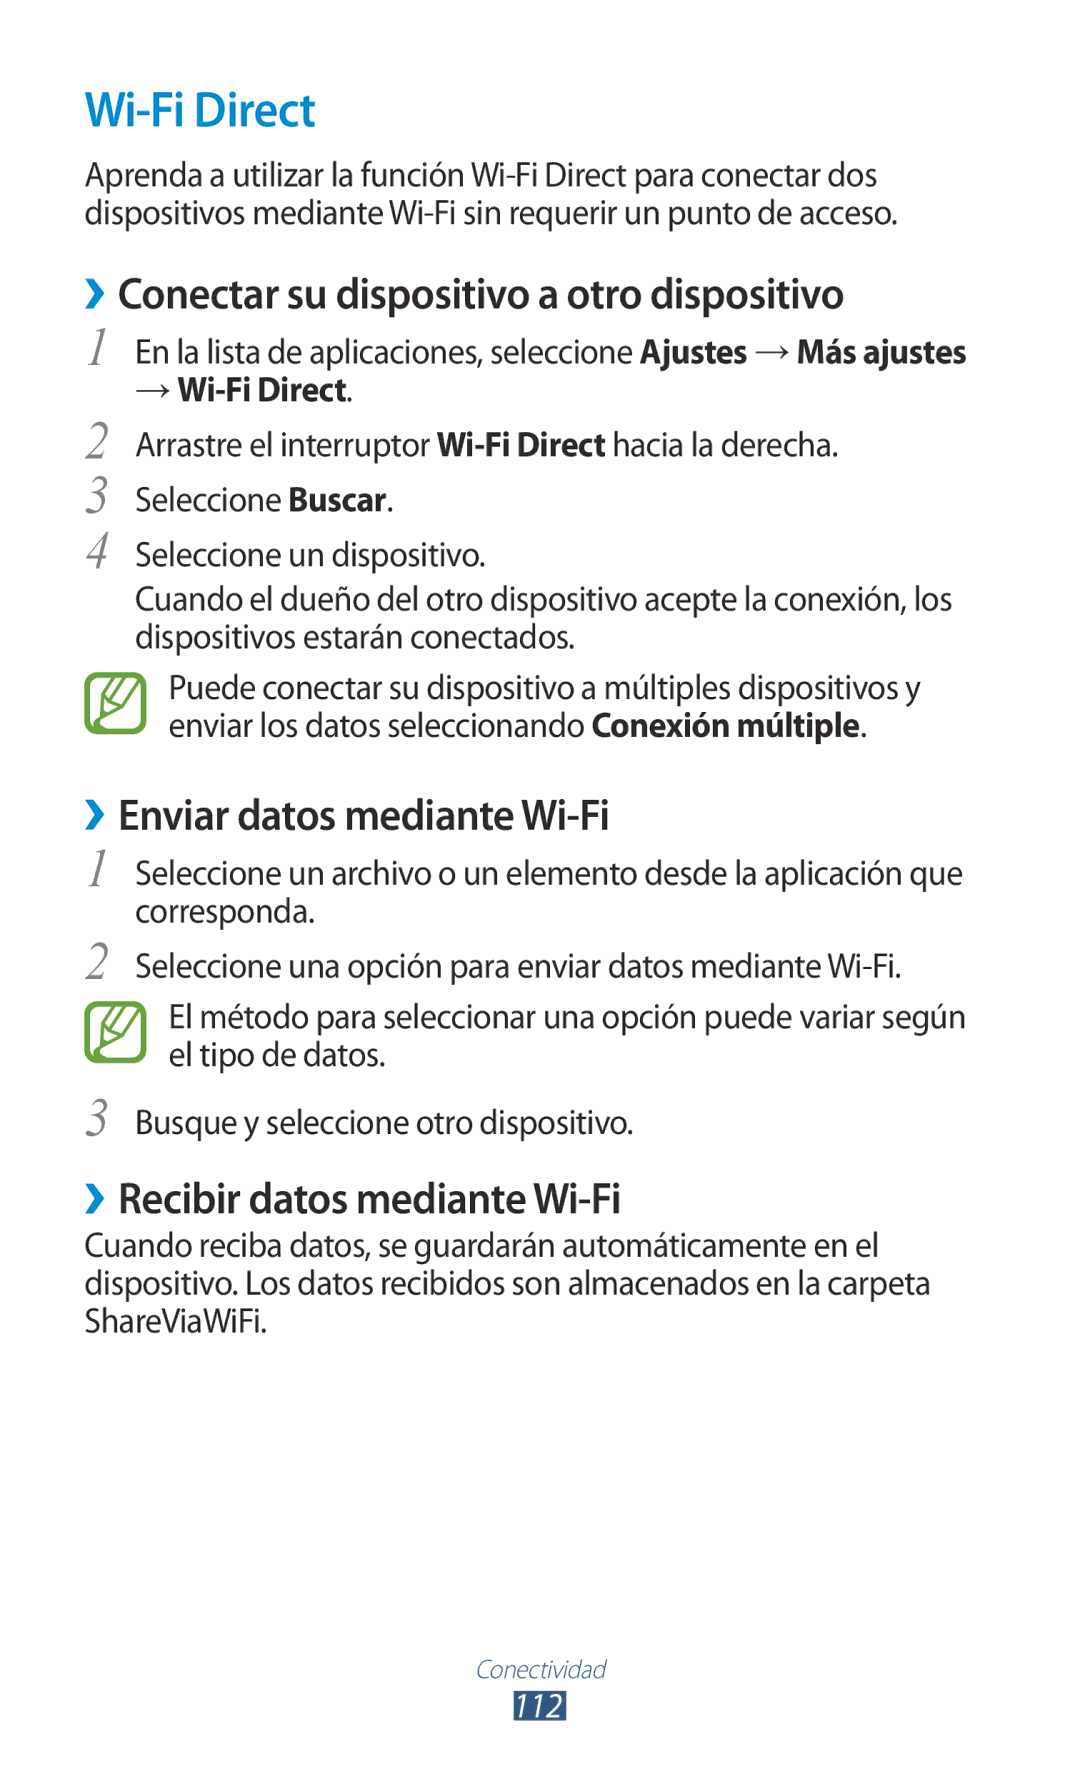 Samsung GT-S7560UWAXEC manual Wi-Fi Direct, ››Conectar su dispositivo a otro dispositivo, ››Enviar datos mediante Wi-Fi 